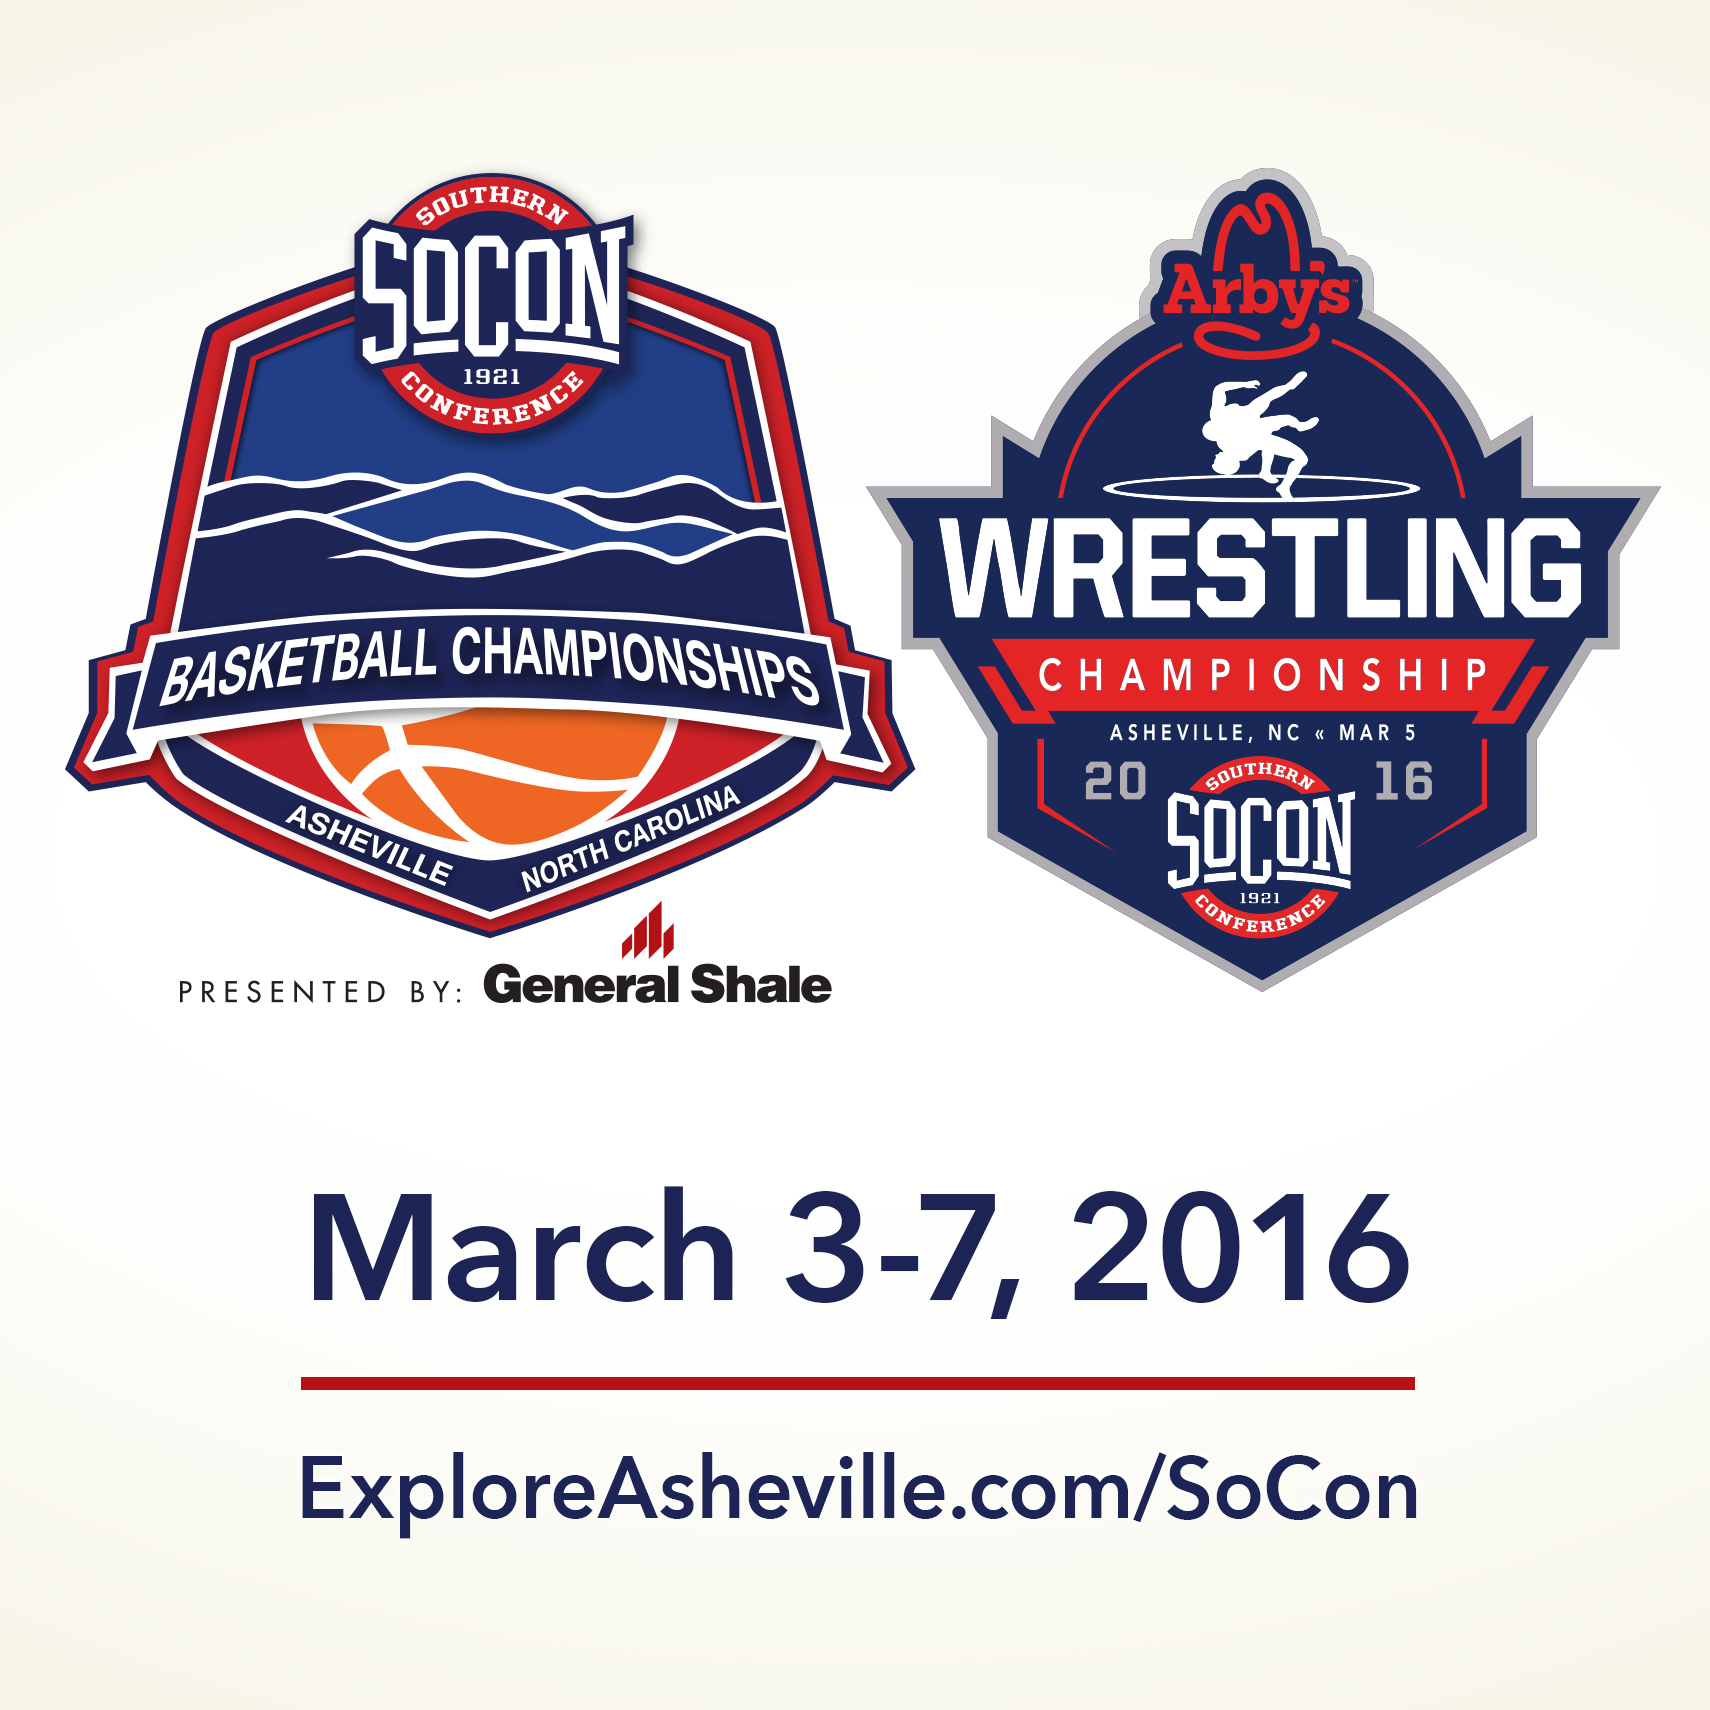 The SoCon Basketball & Wrestling Tournaments Travel Information